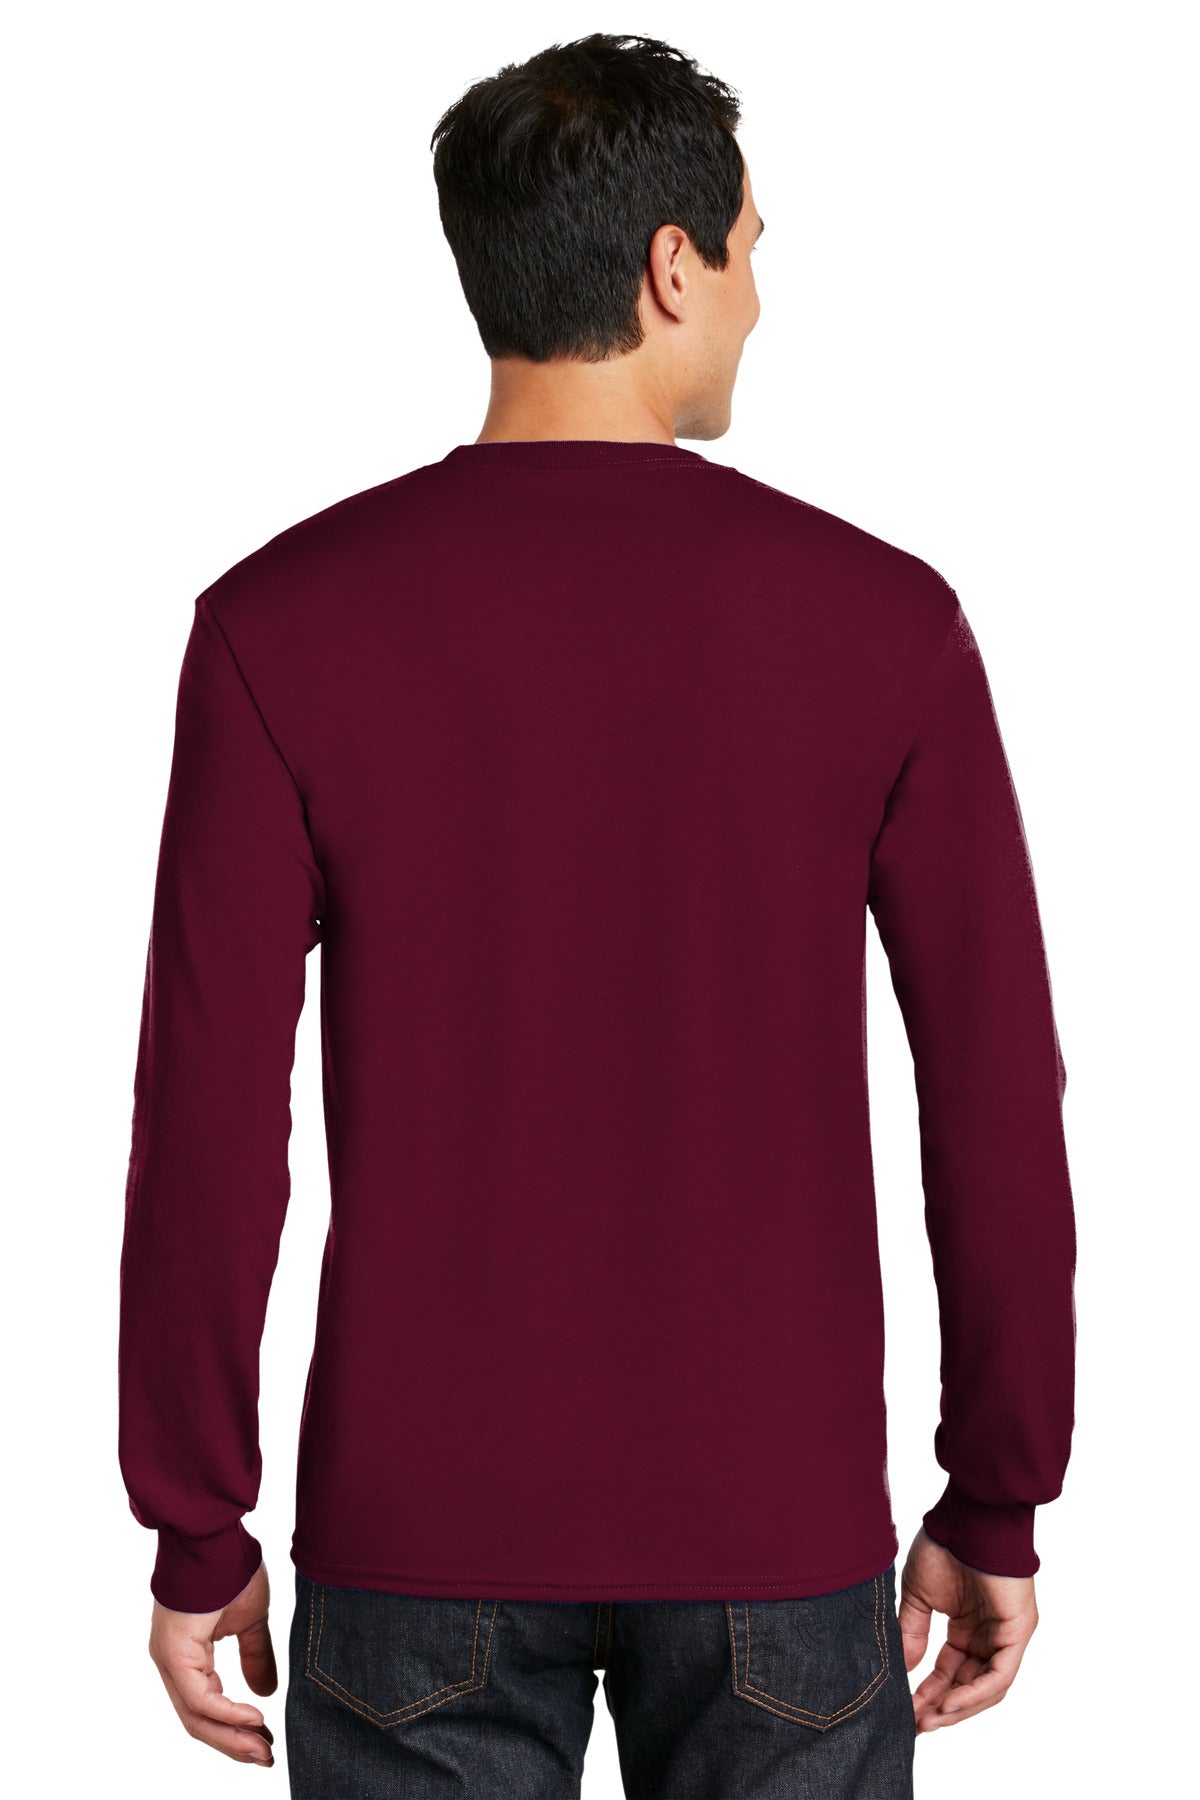 Gildan® - DryBlend® 50 Cotton/50 Poly Long Sleeve T-Shirt. 8400 [Maroon] - DFW Impression